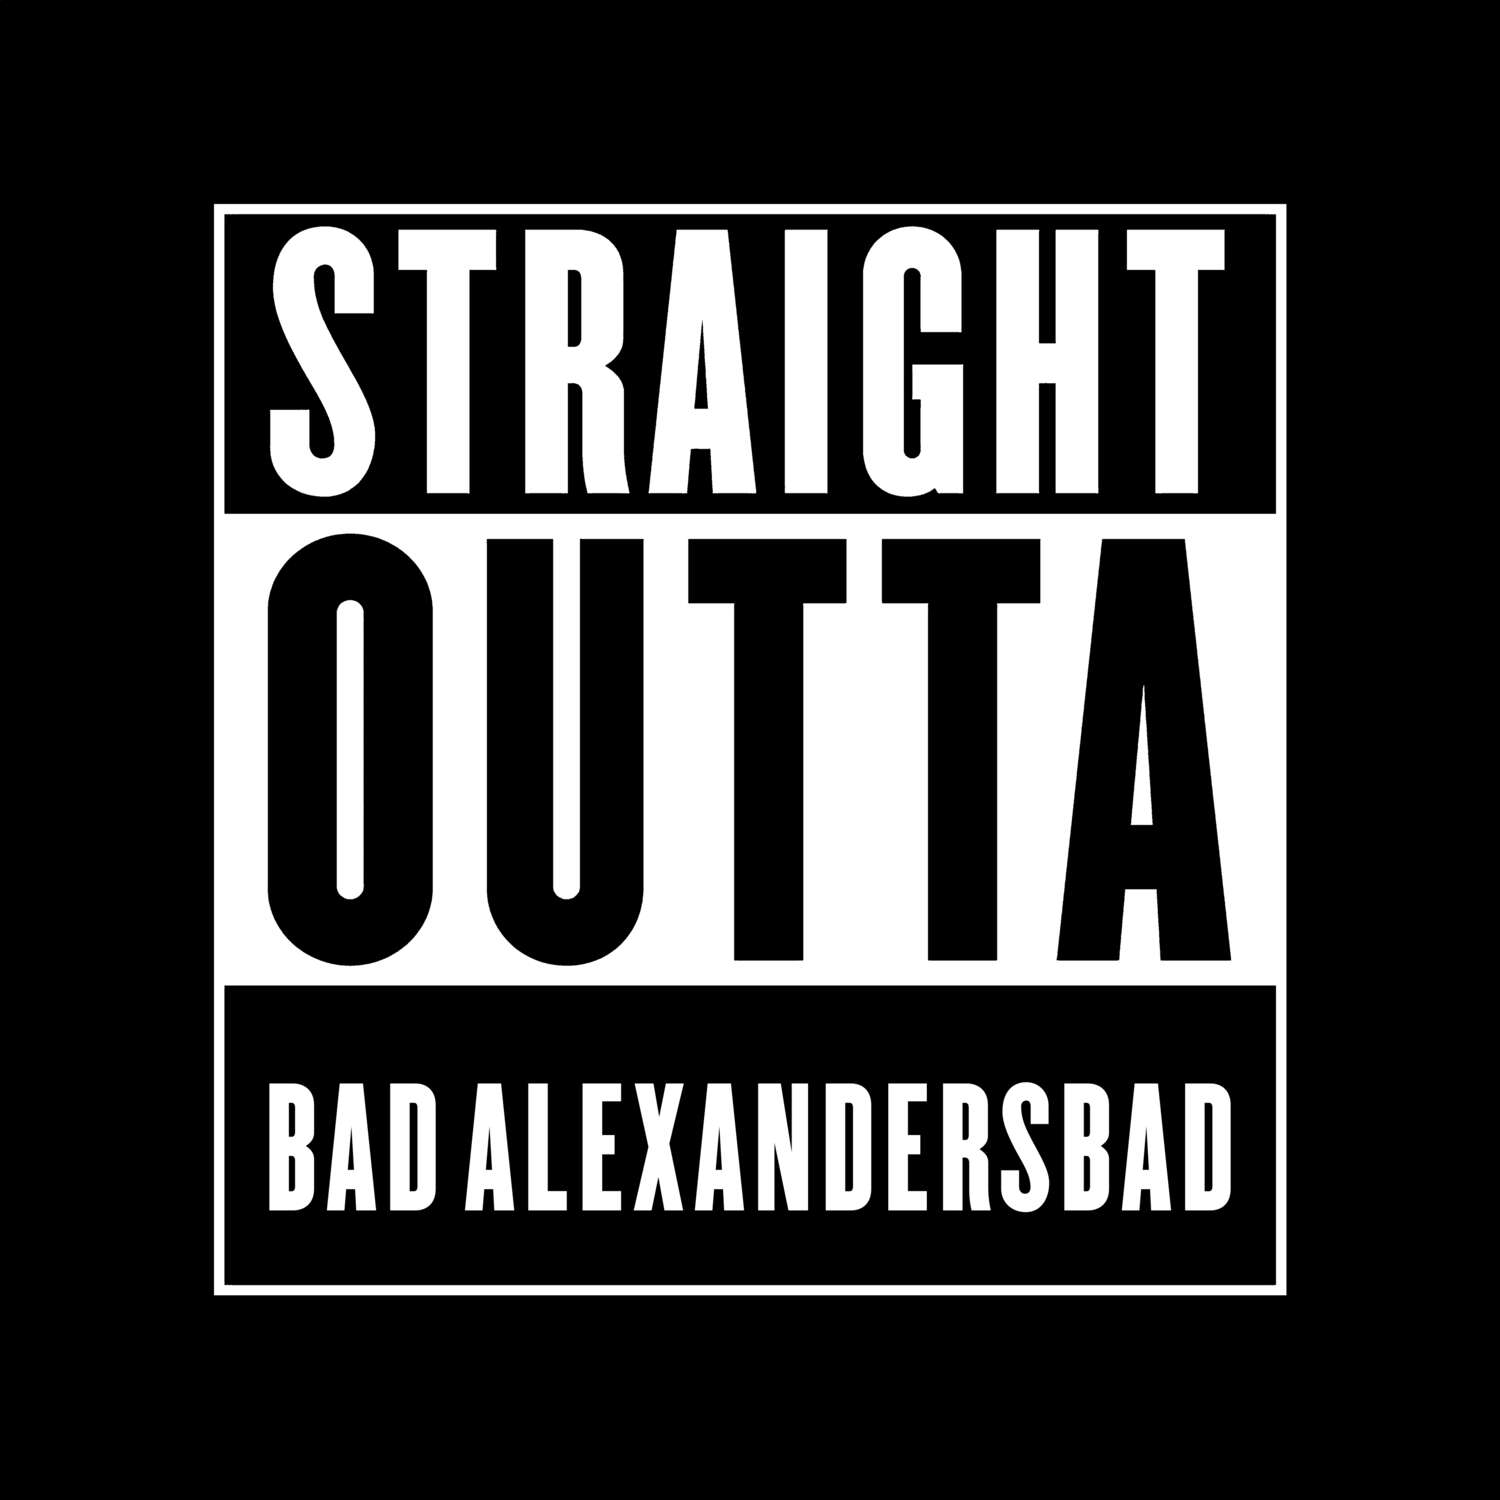 Bad Alexandersbad T-Shirt »Straight Outta«